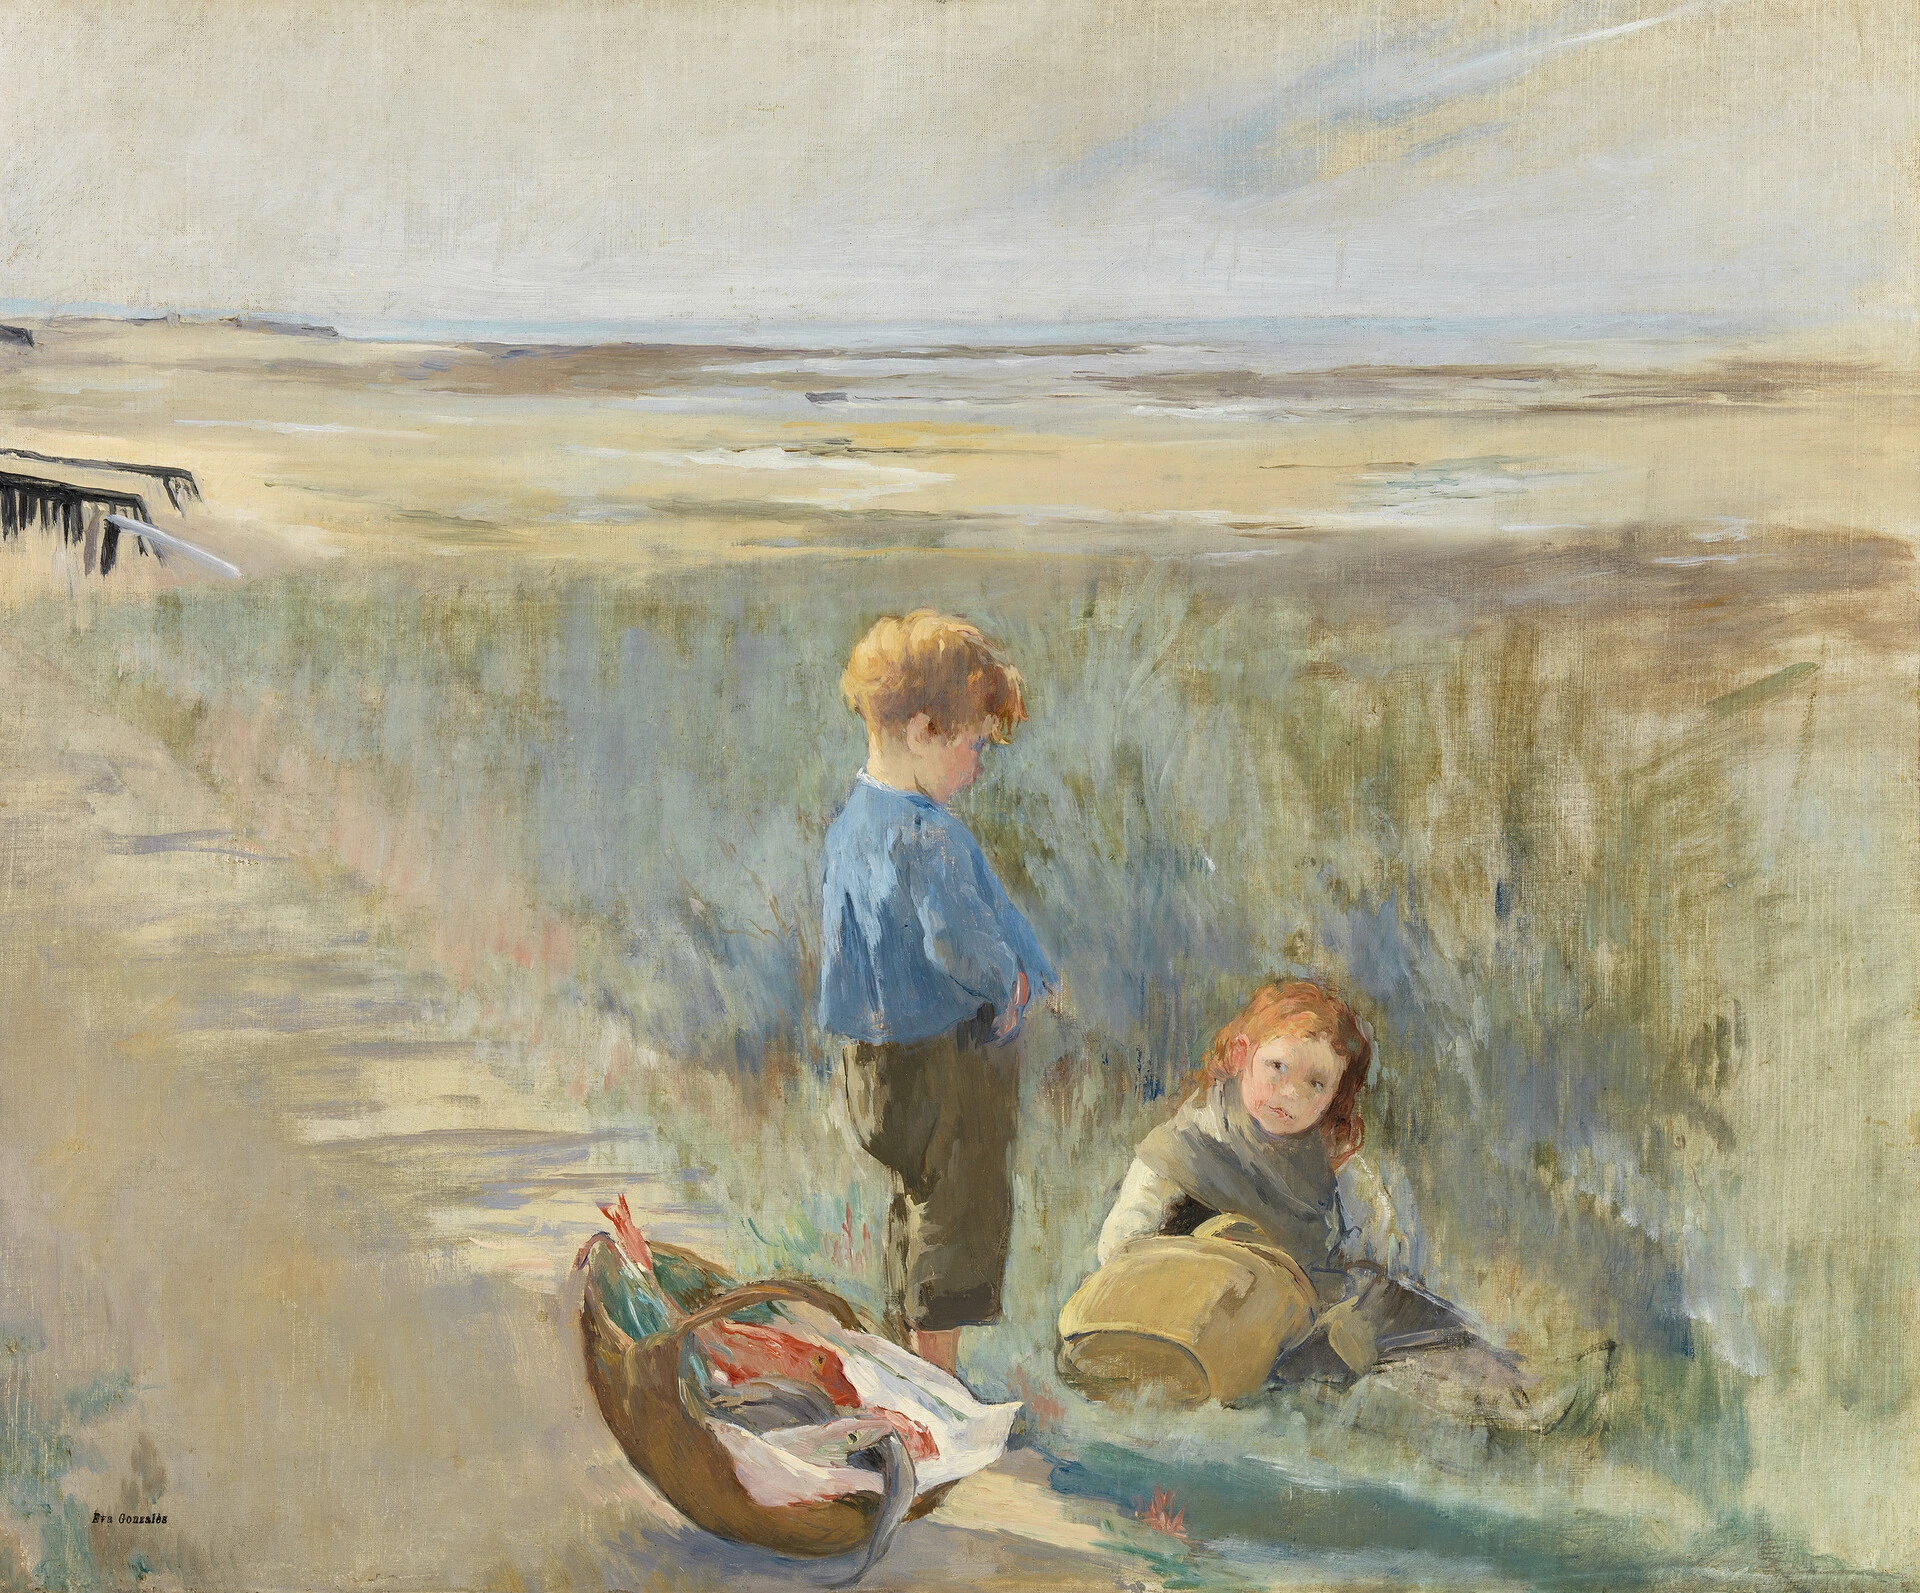 Children on the sand dunes, Eva Gonzalès